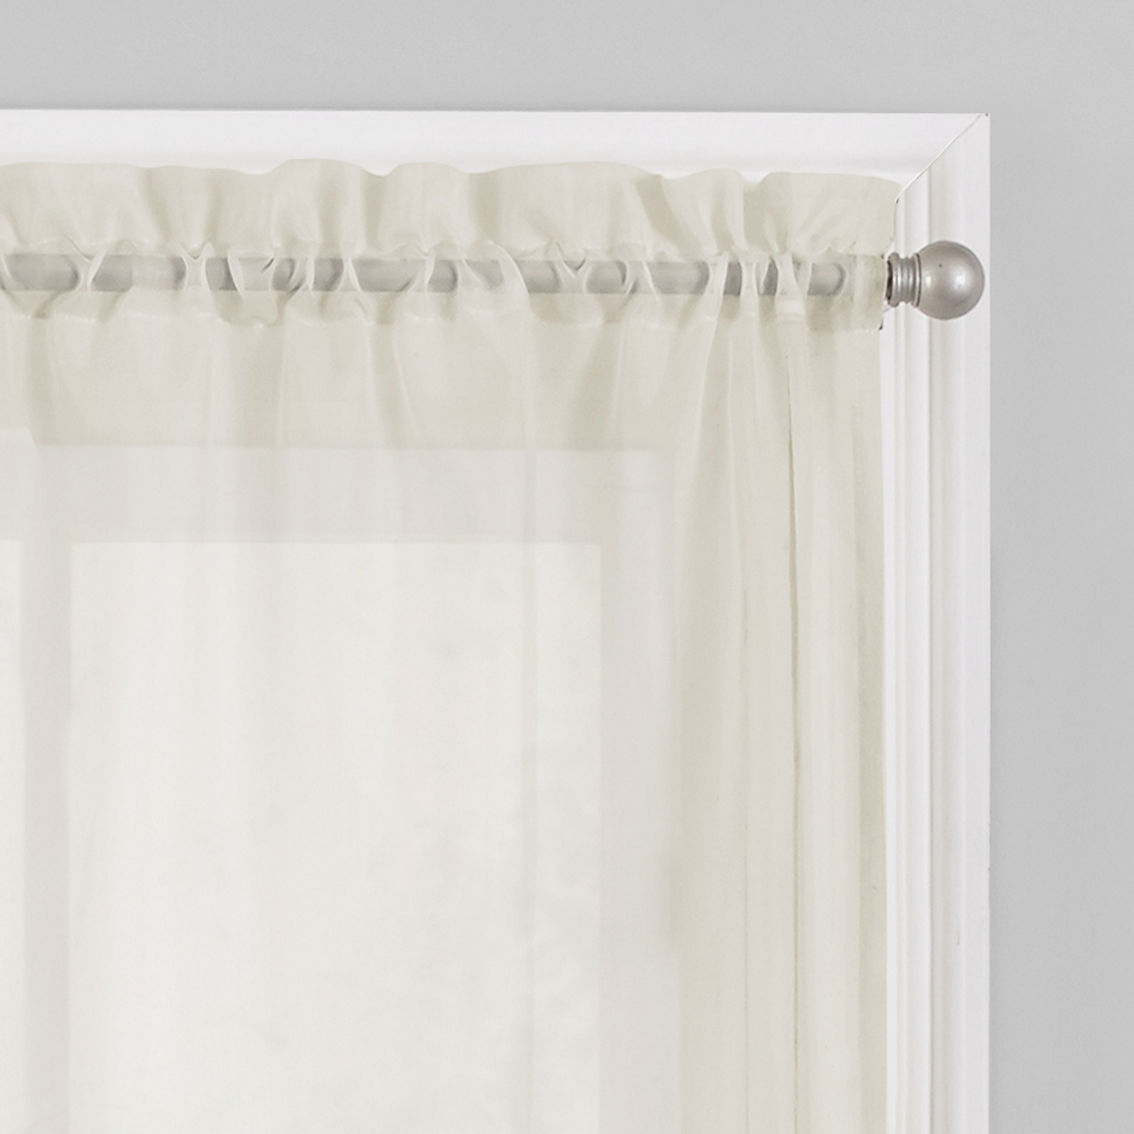 Arm & Hammer Curtain Fresh Odor-Neutralizing Valance and Curtain Panel 3 pc. Set - Image 2 of 2